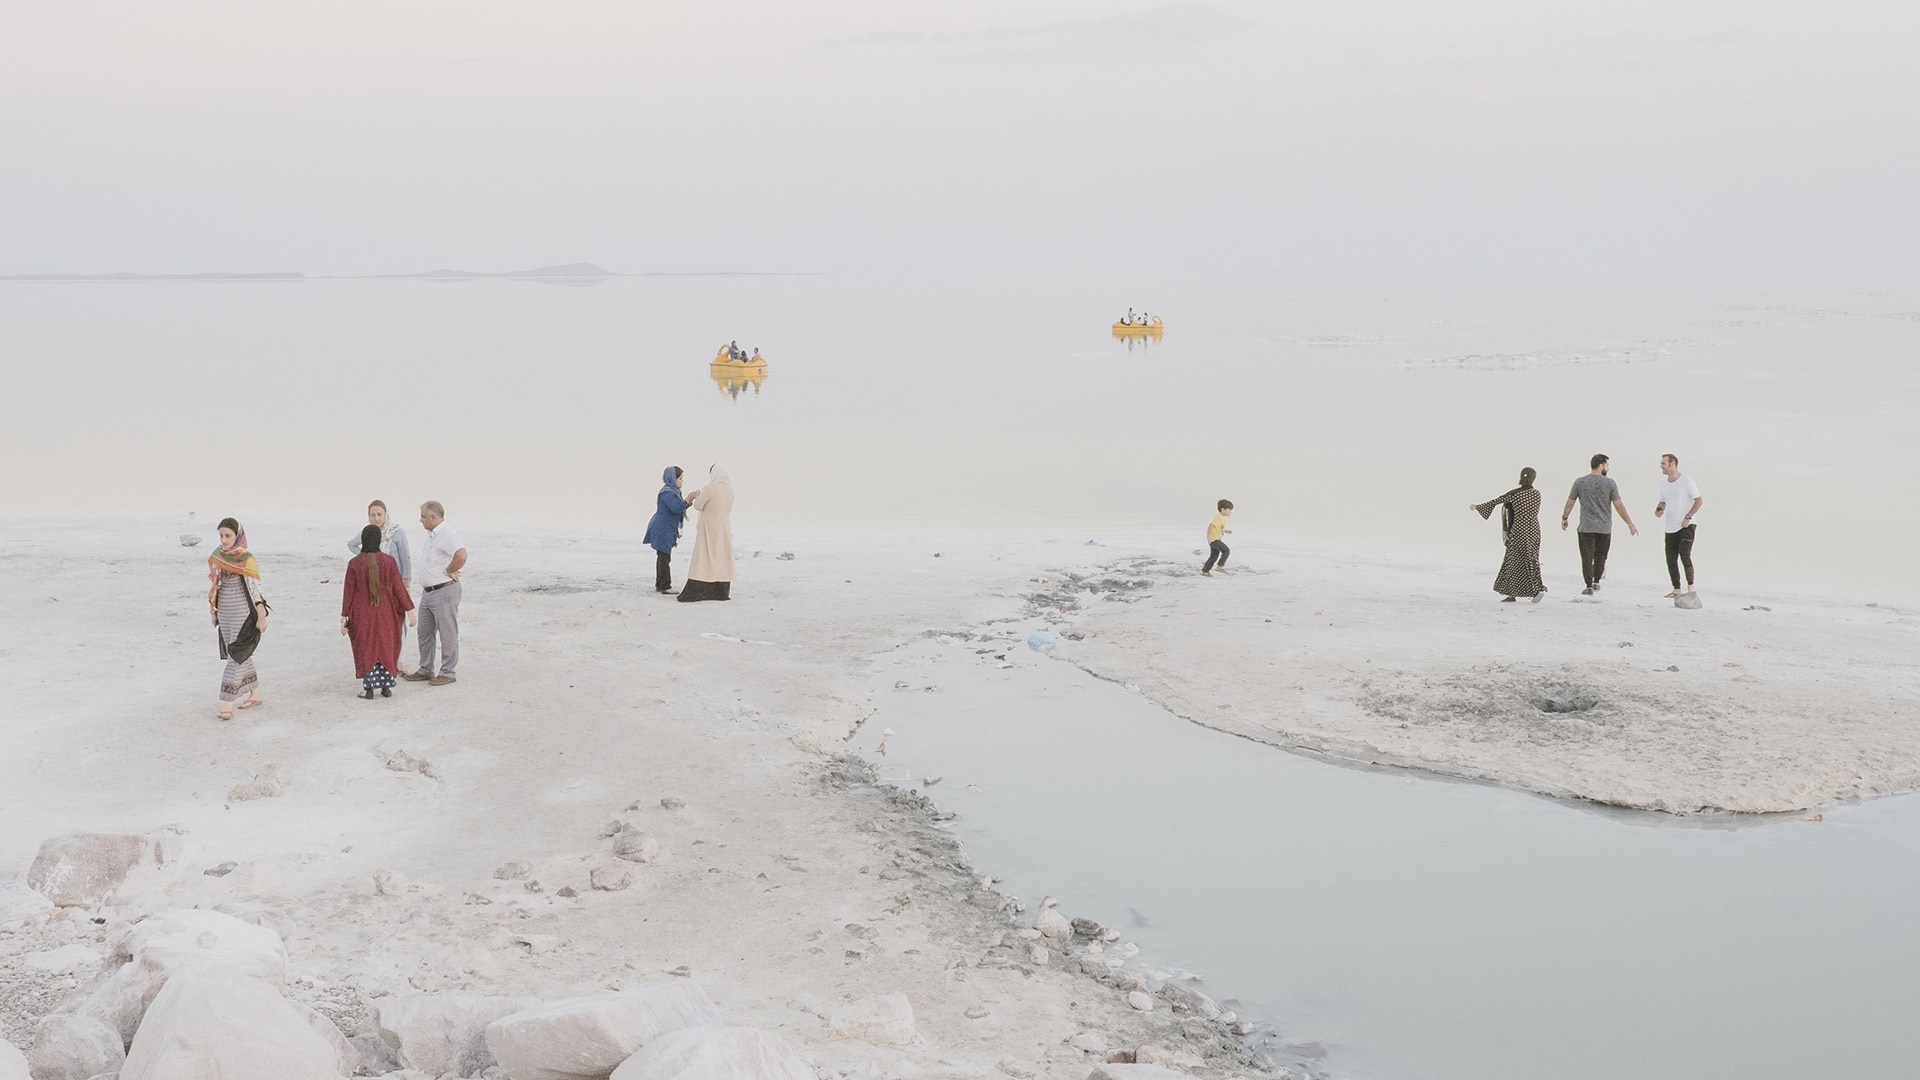 The 2019 Eugene Smith Grant: A new desert in Iran